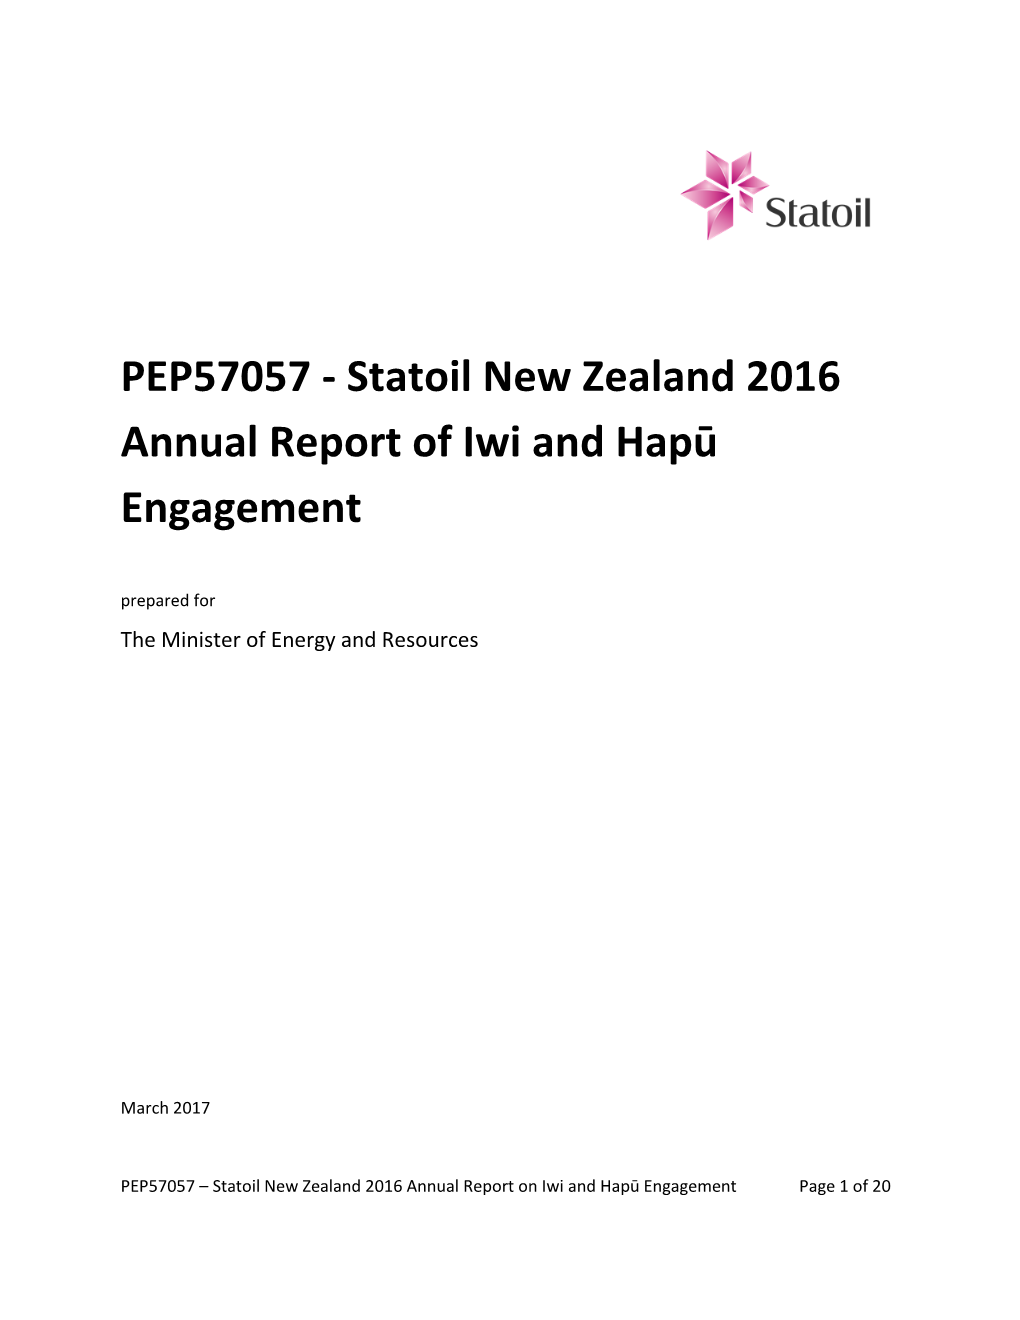 PEP55781 2016 Engagement Report